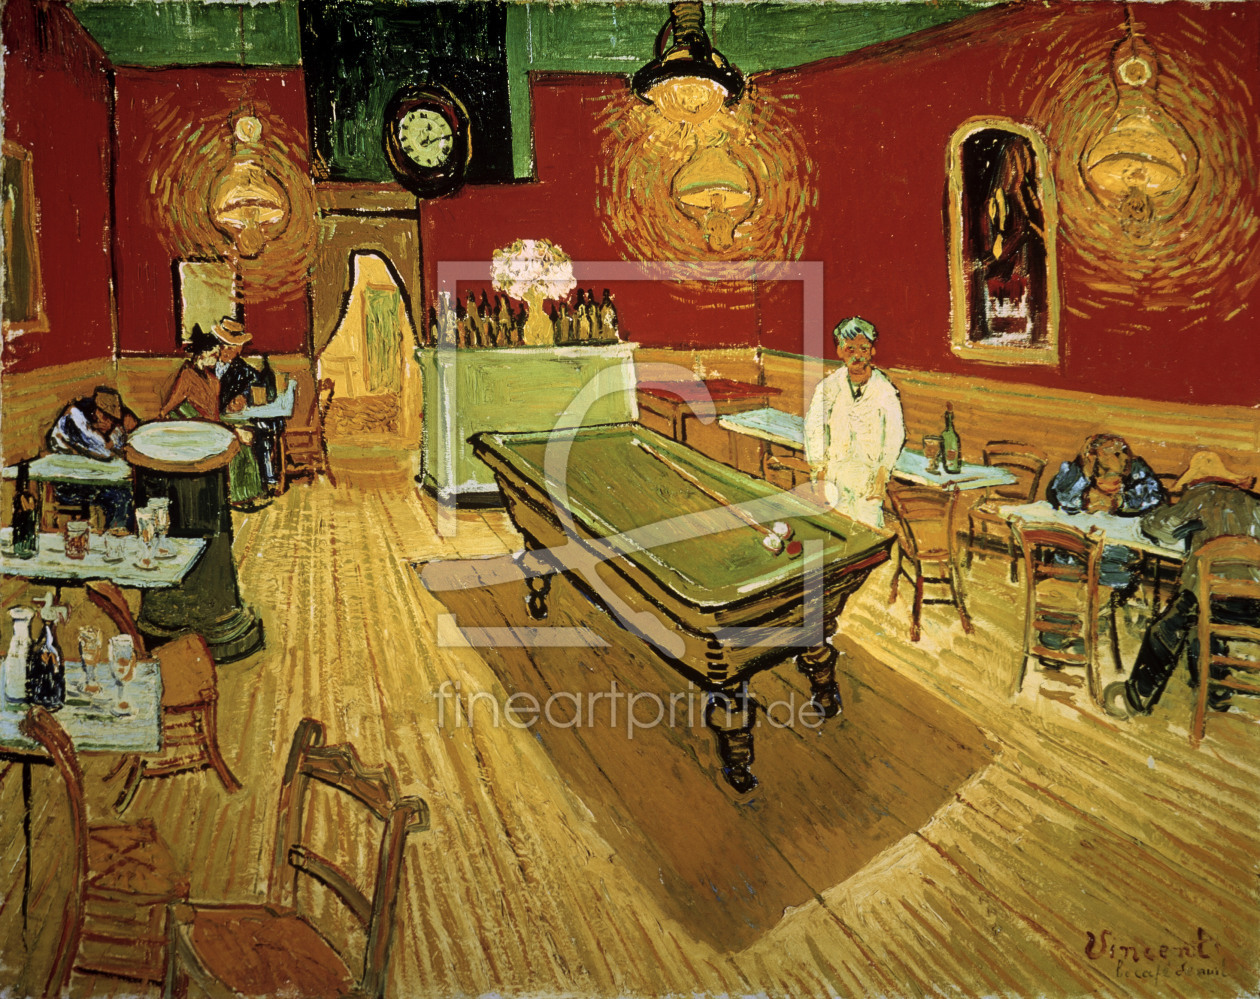 Bild-Nr.: 30003152 van Gogh / The Night Café / 1888 erstellt von van Gogh, Vincent